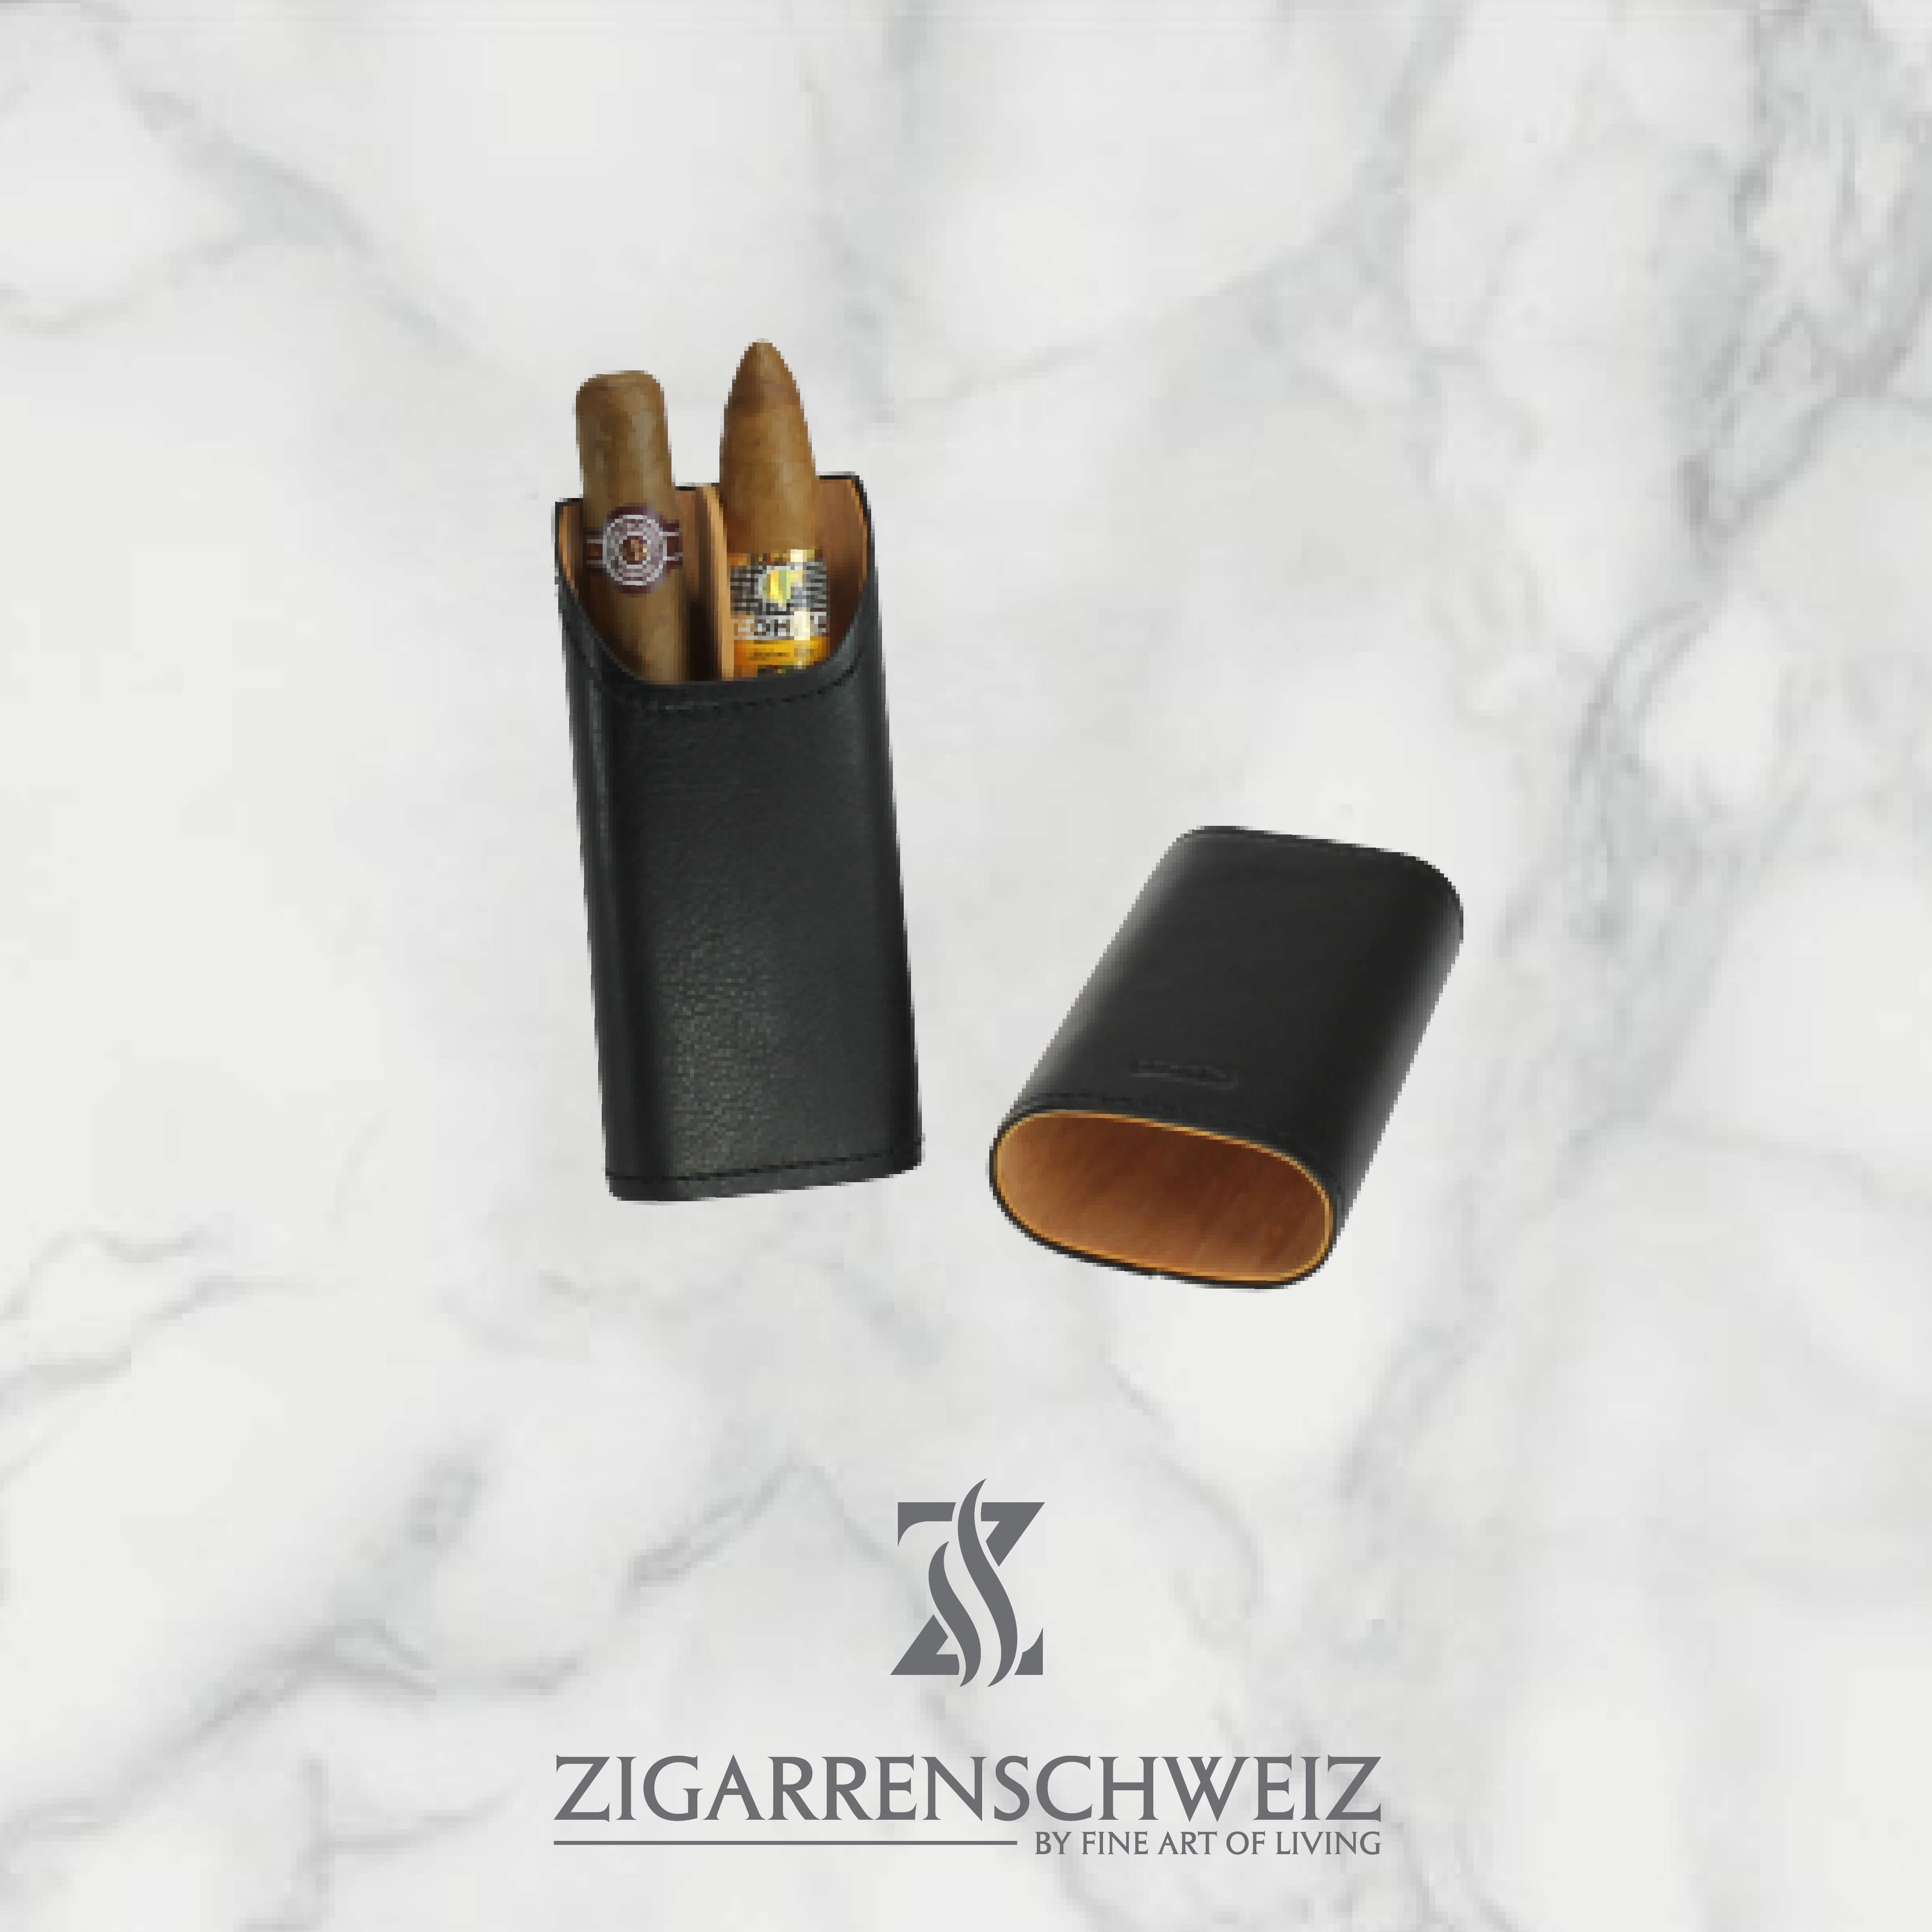 Adorini Zigarrenetui, Material: Echtleder, Kapazität: 2-3 Zigarren, Farbe: Schwarz, mit Divider